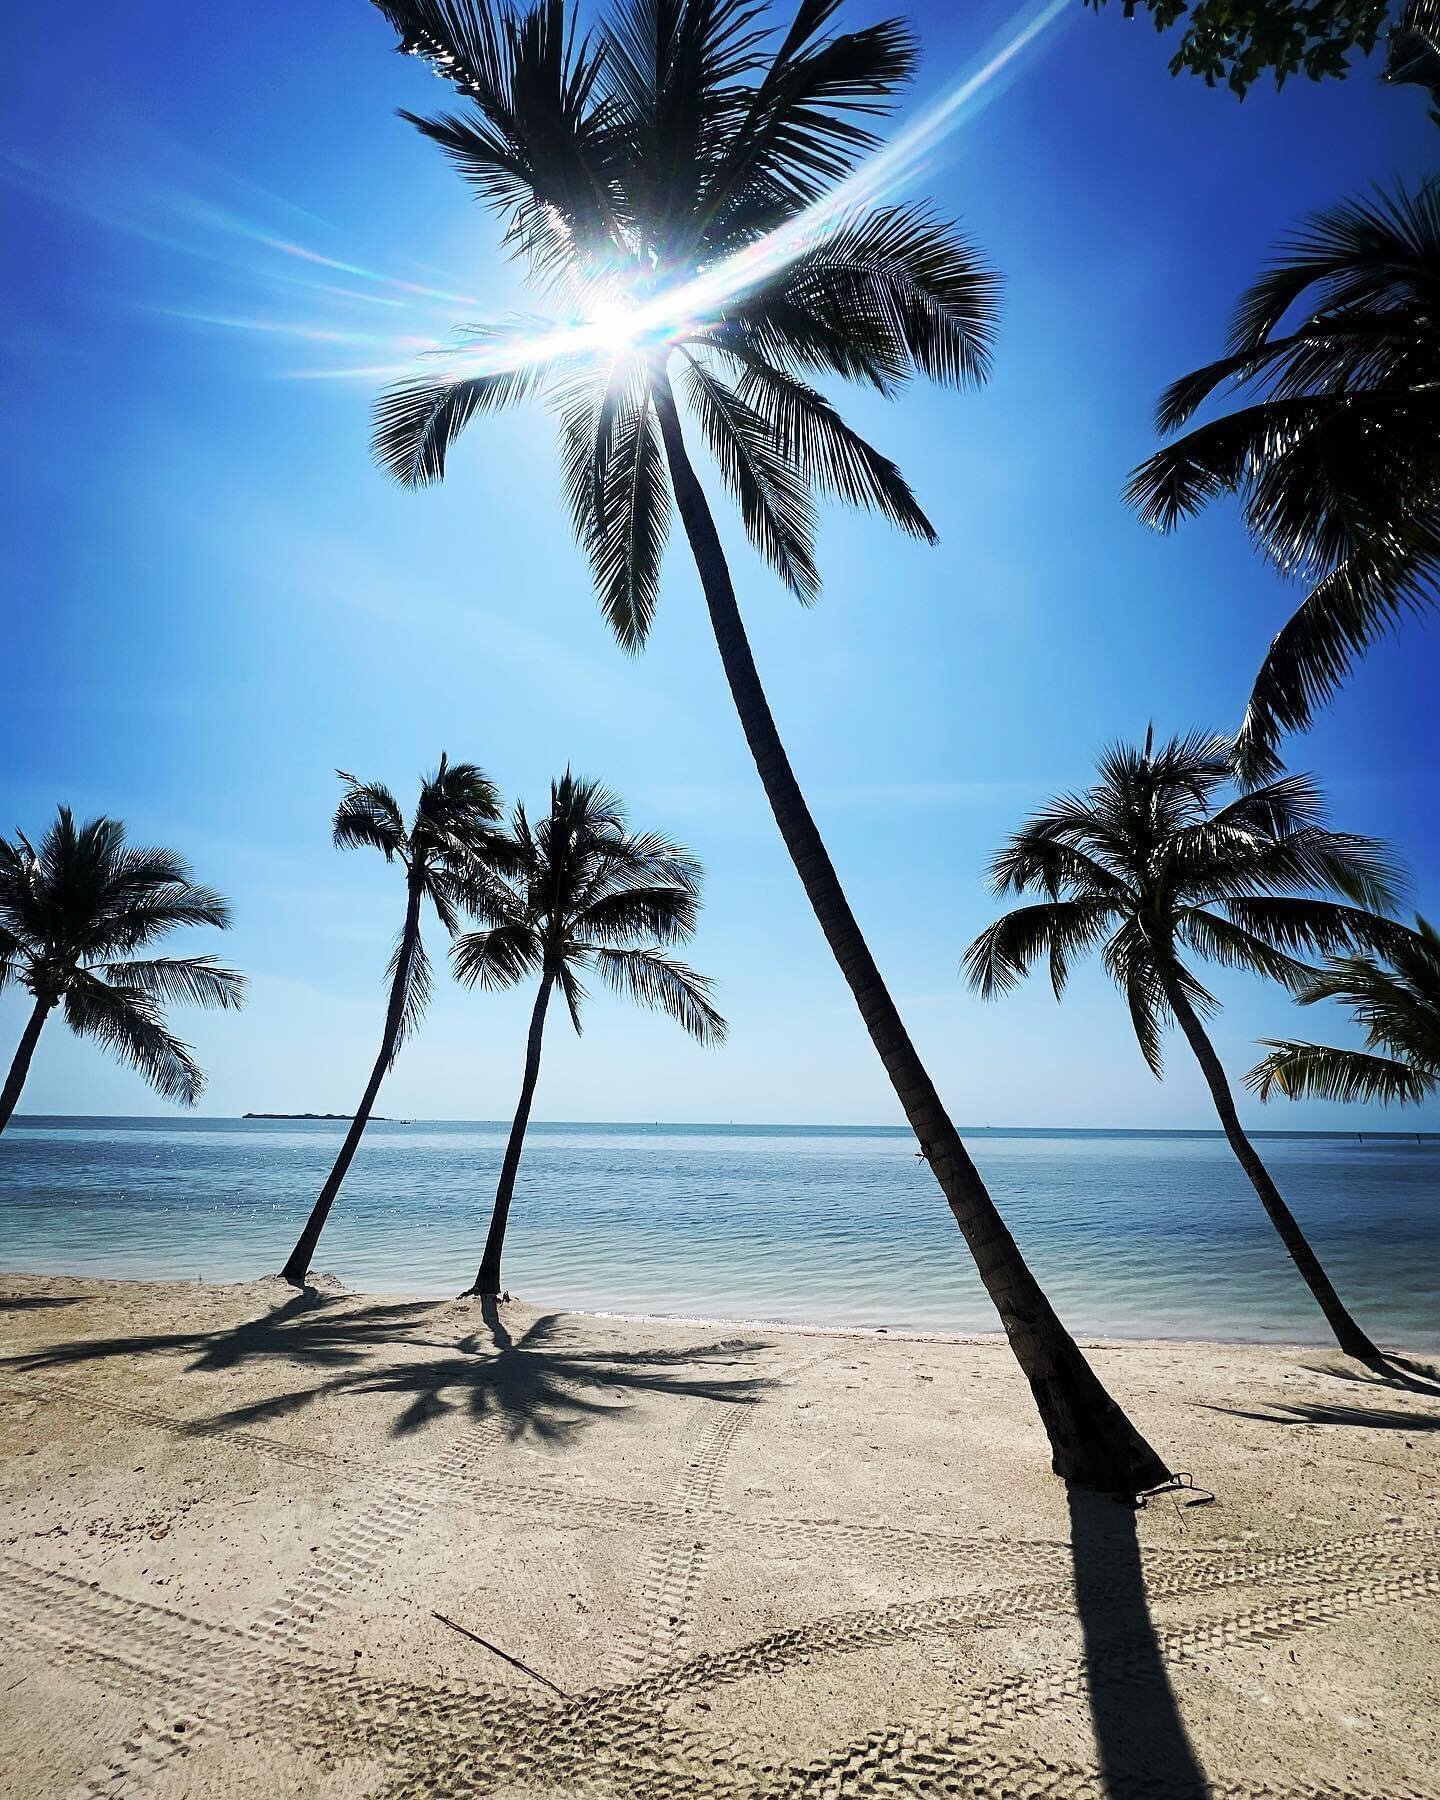 Paradise Is Calling 🌴 This property is listed with @flkeyssoldsisters_oceansir #islamorada #floridakeys #paradisefound #palmtrees #80degrees